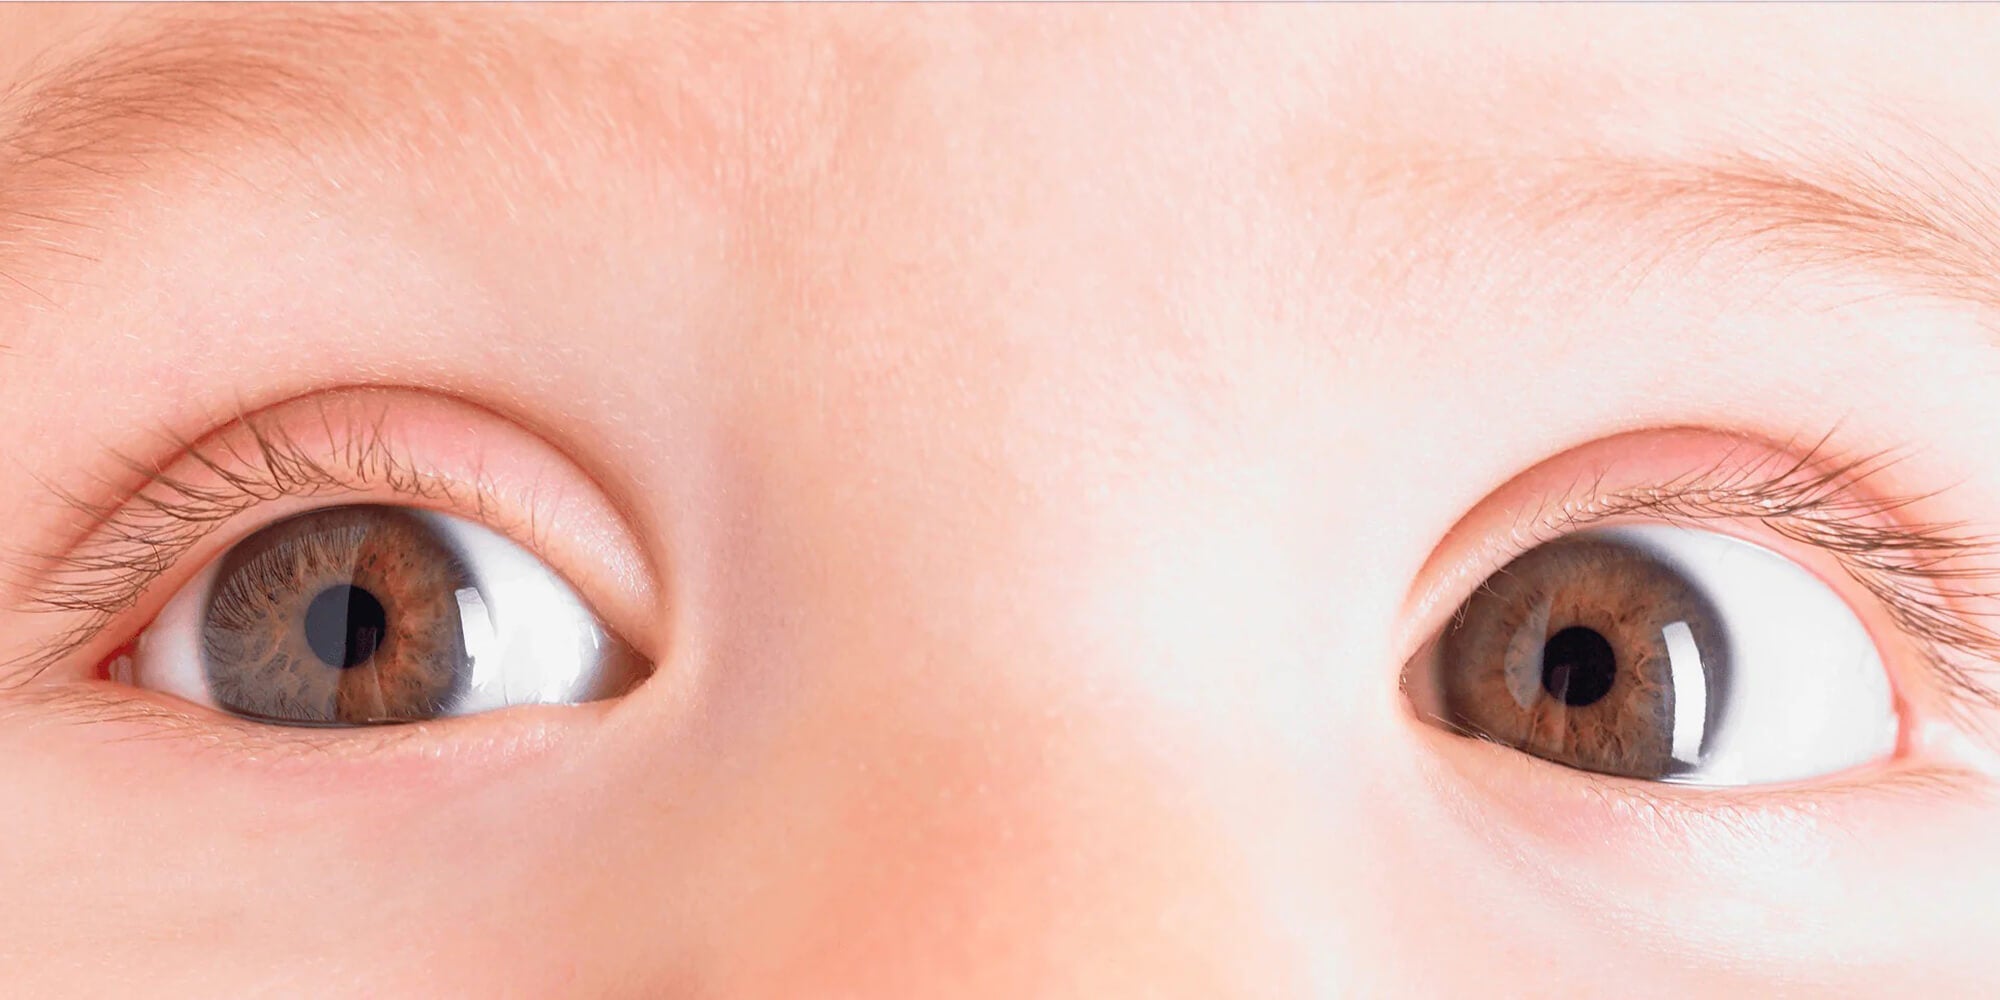 baby vision development blog post chillax 